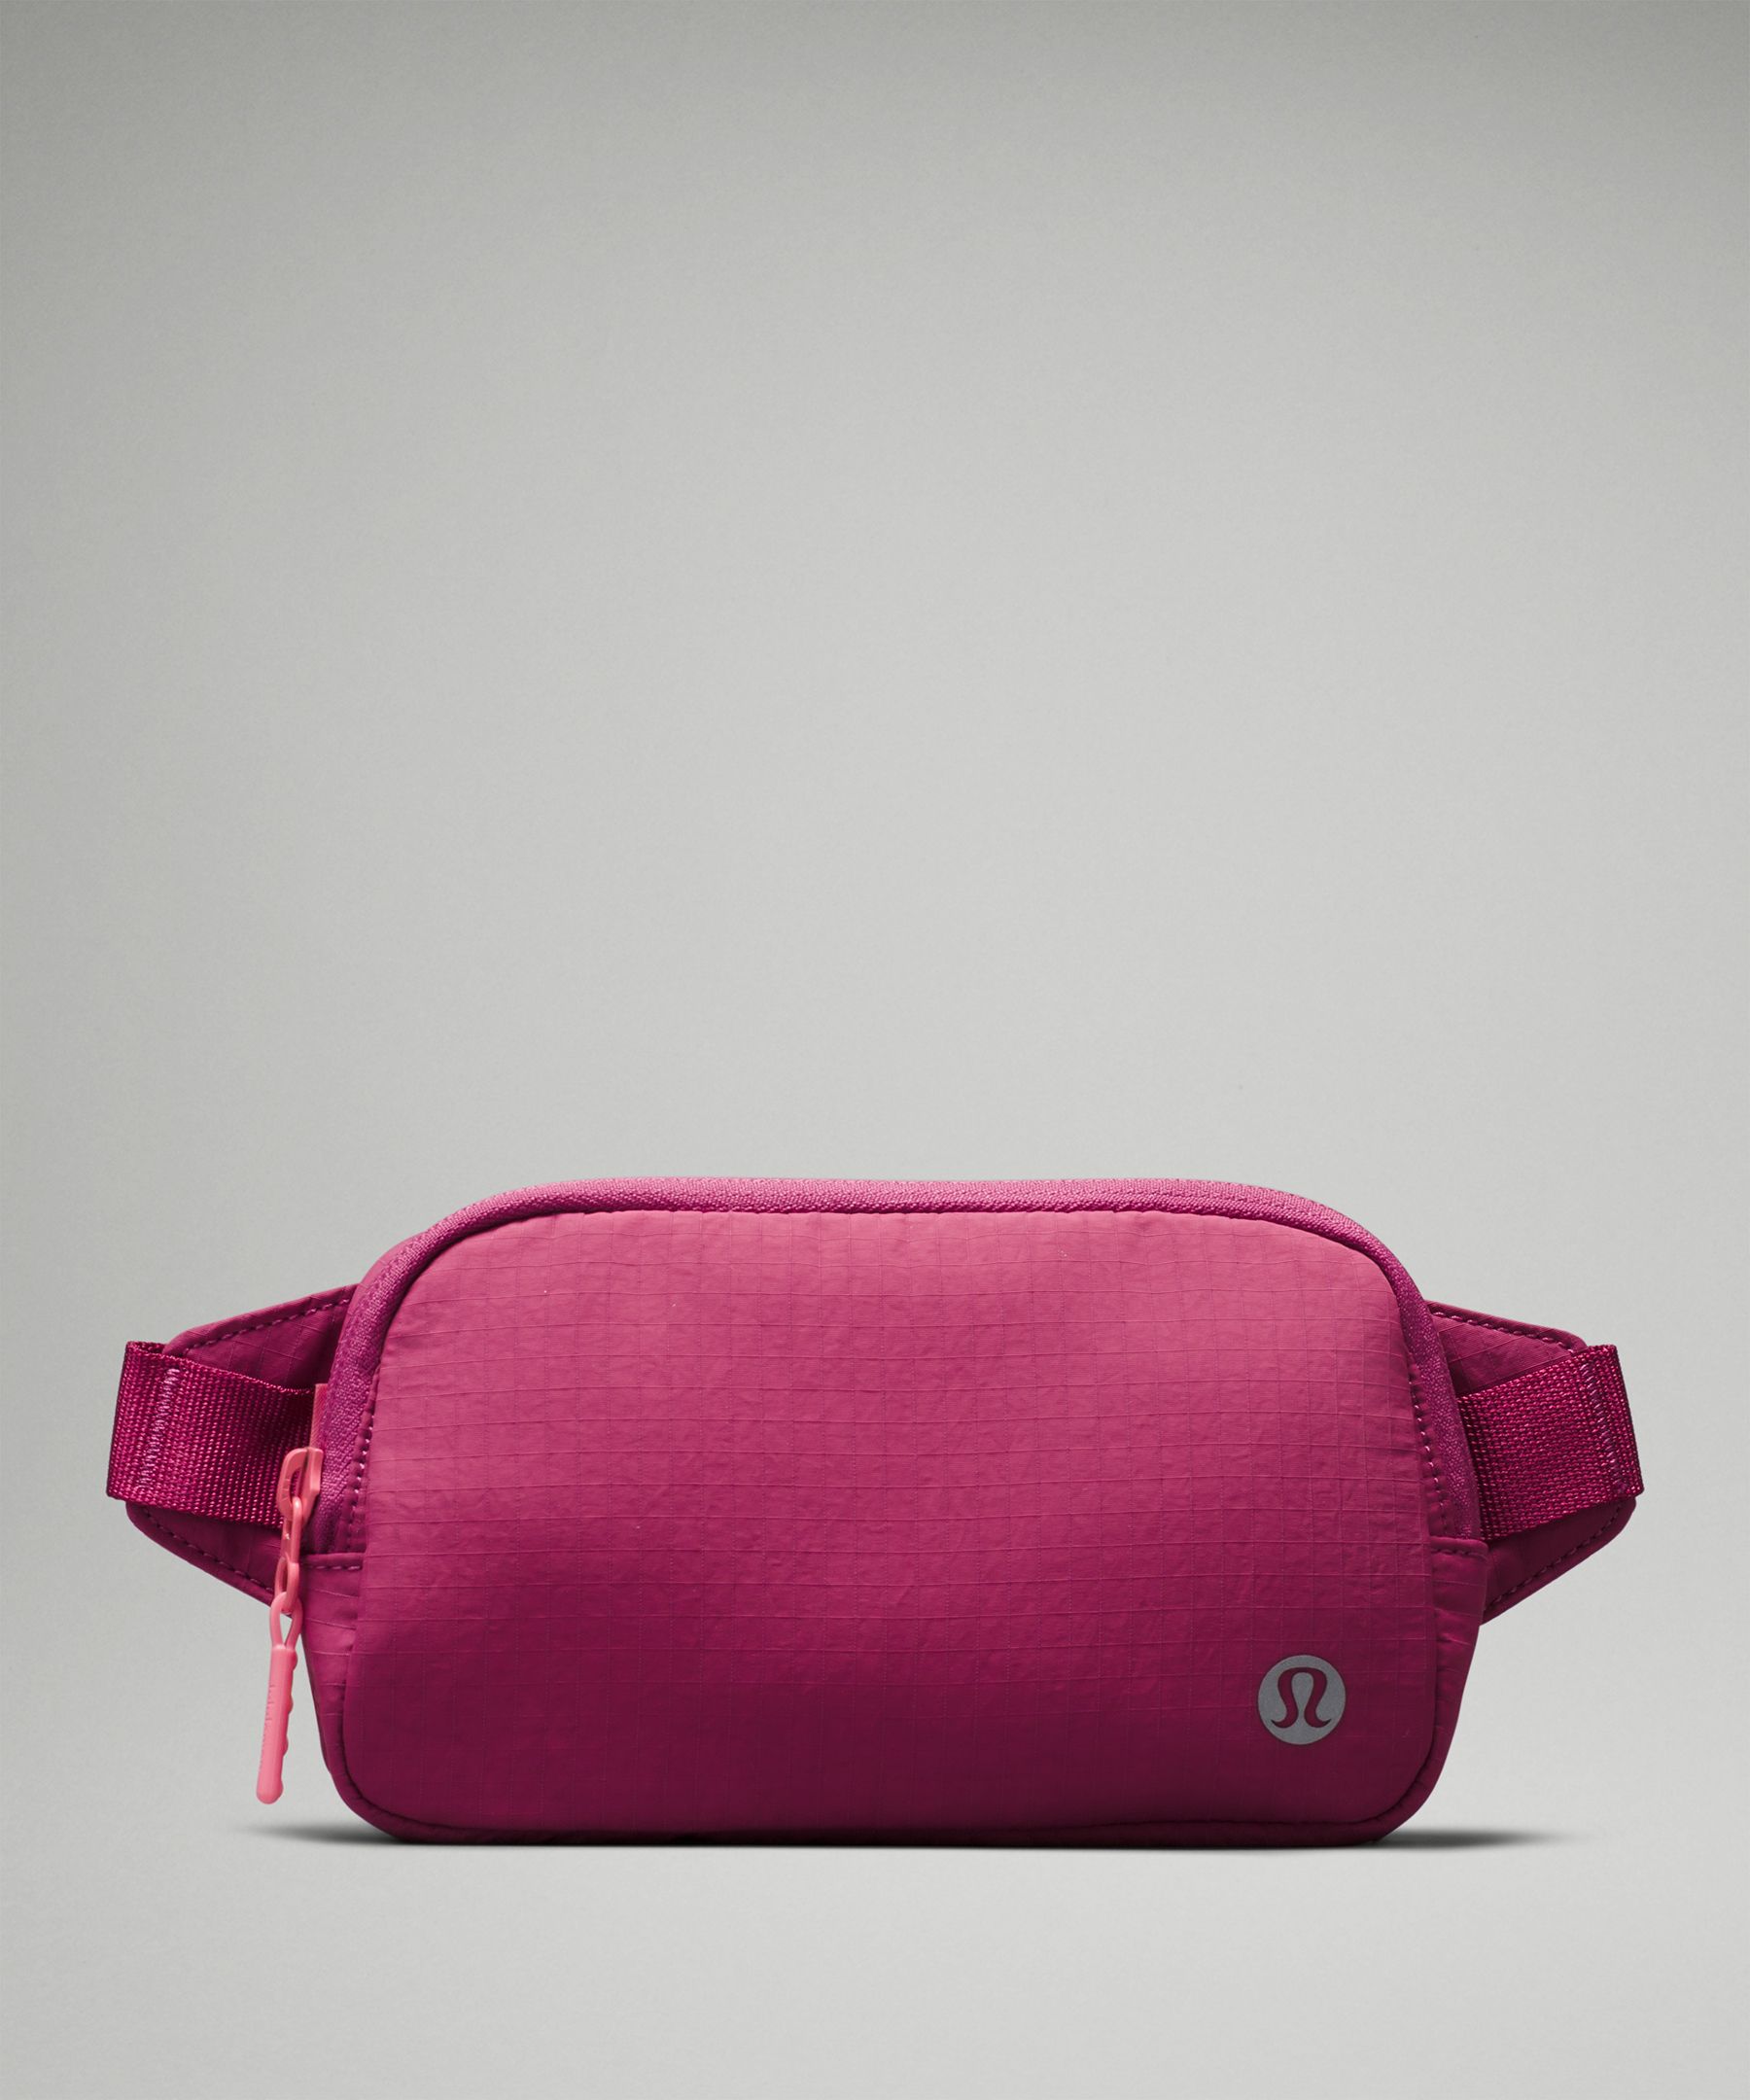 Lululemon Everywhere belt bag Sakura pink size 1L